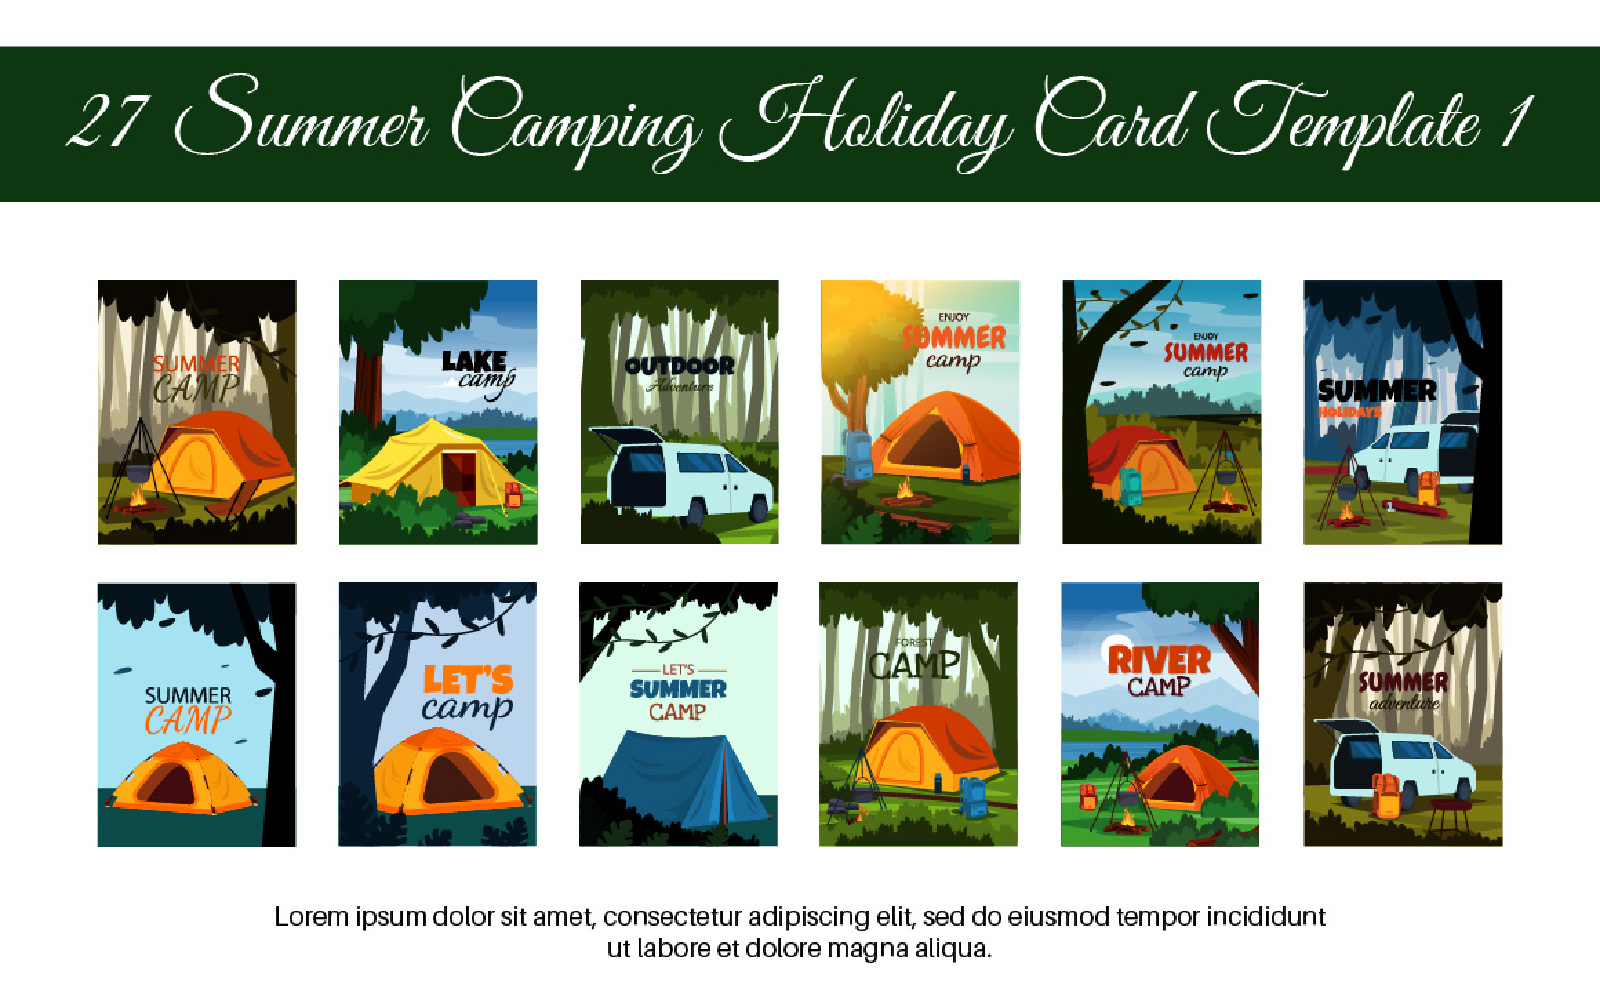 27 Summer Camping Holiday Card Template 1